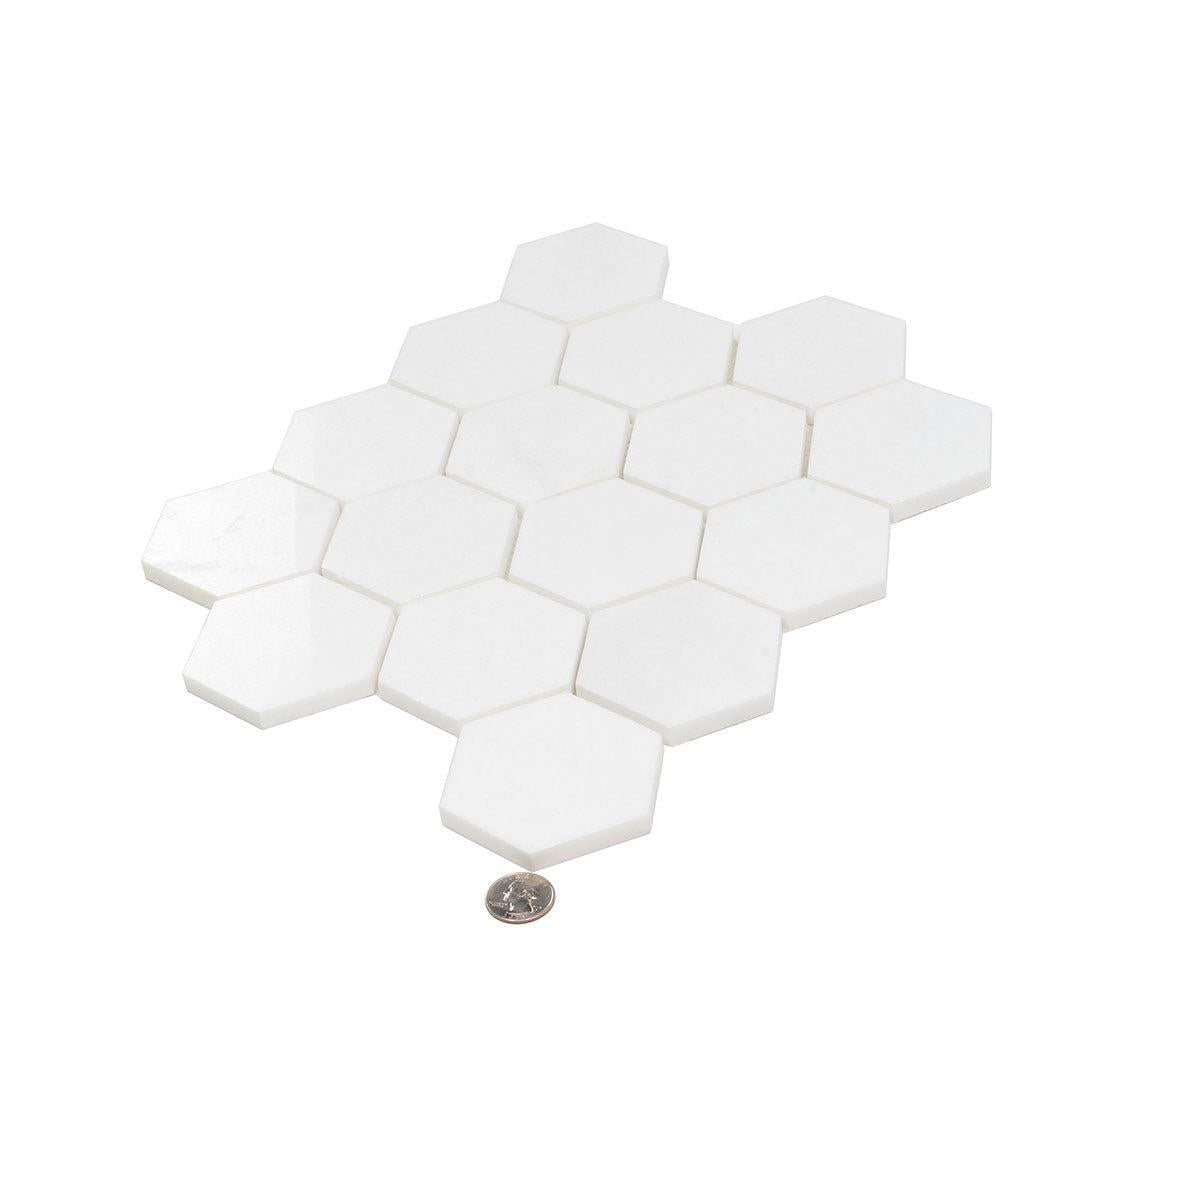 3" Thassos Marble Hexagon Tile Polished